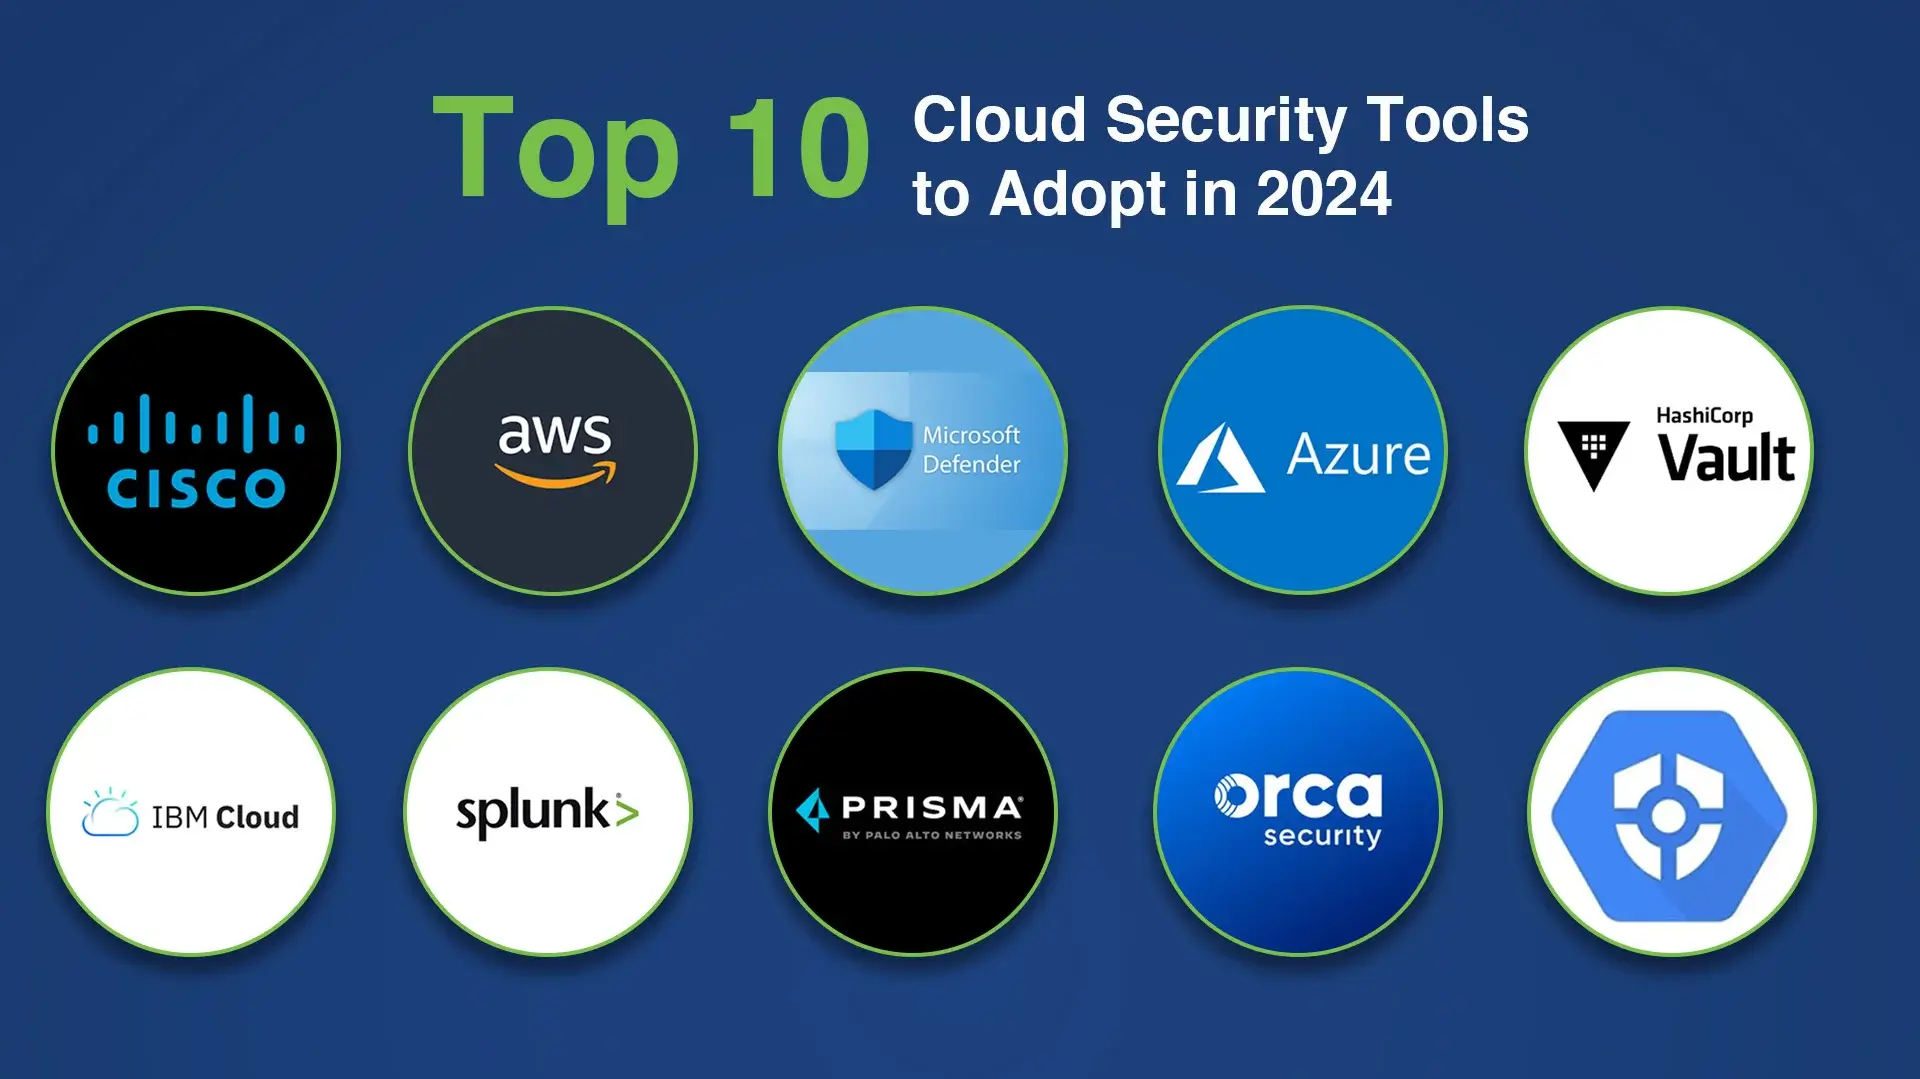 Cloud Security tools